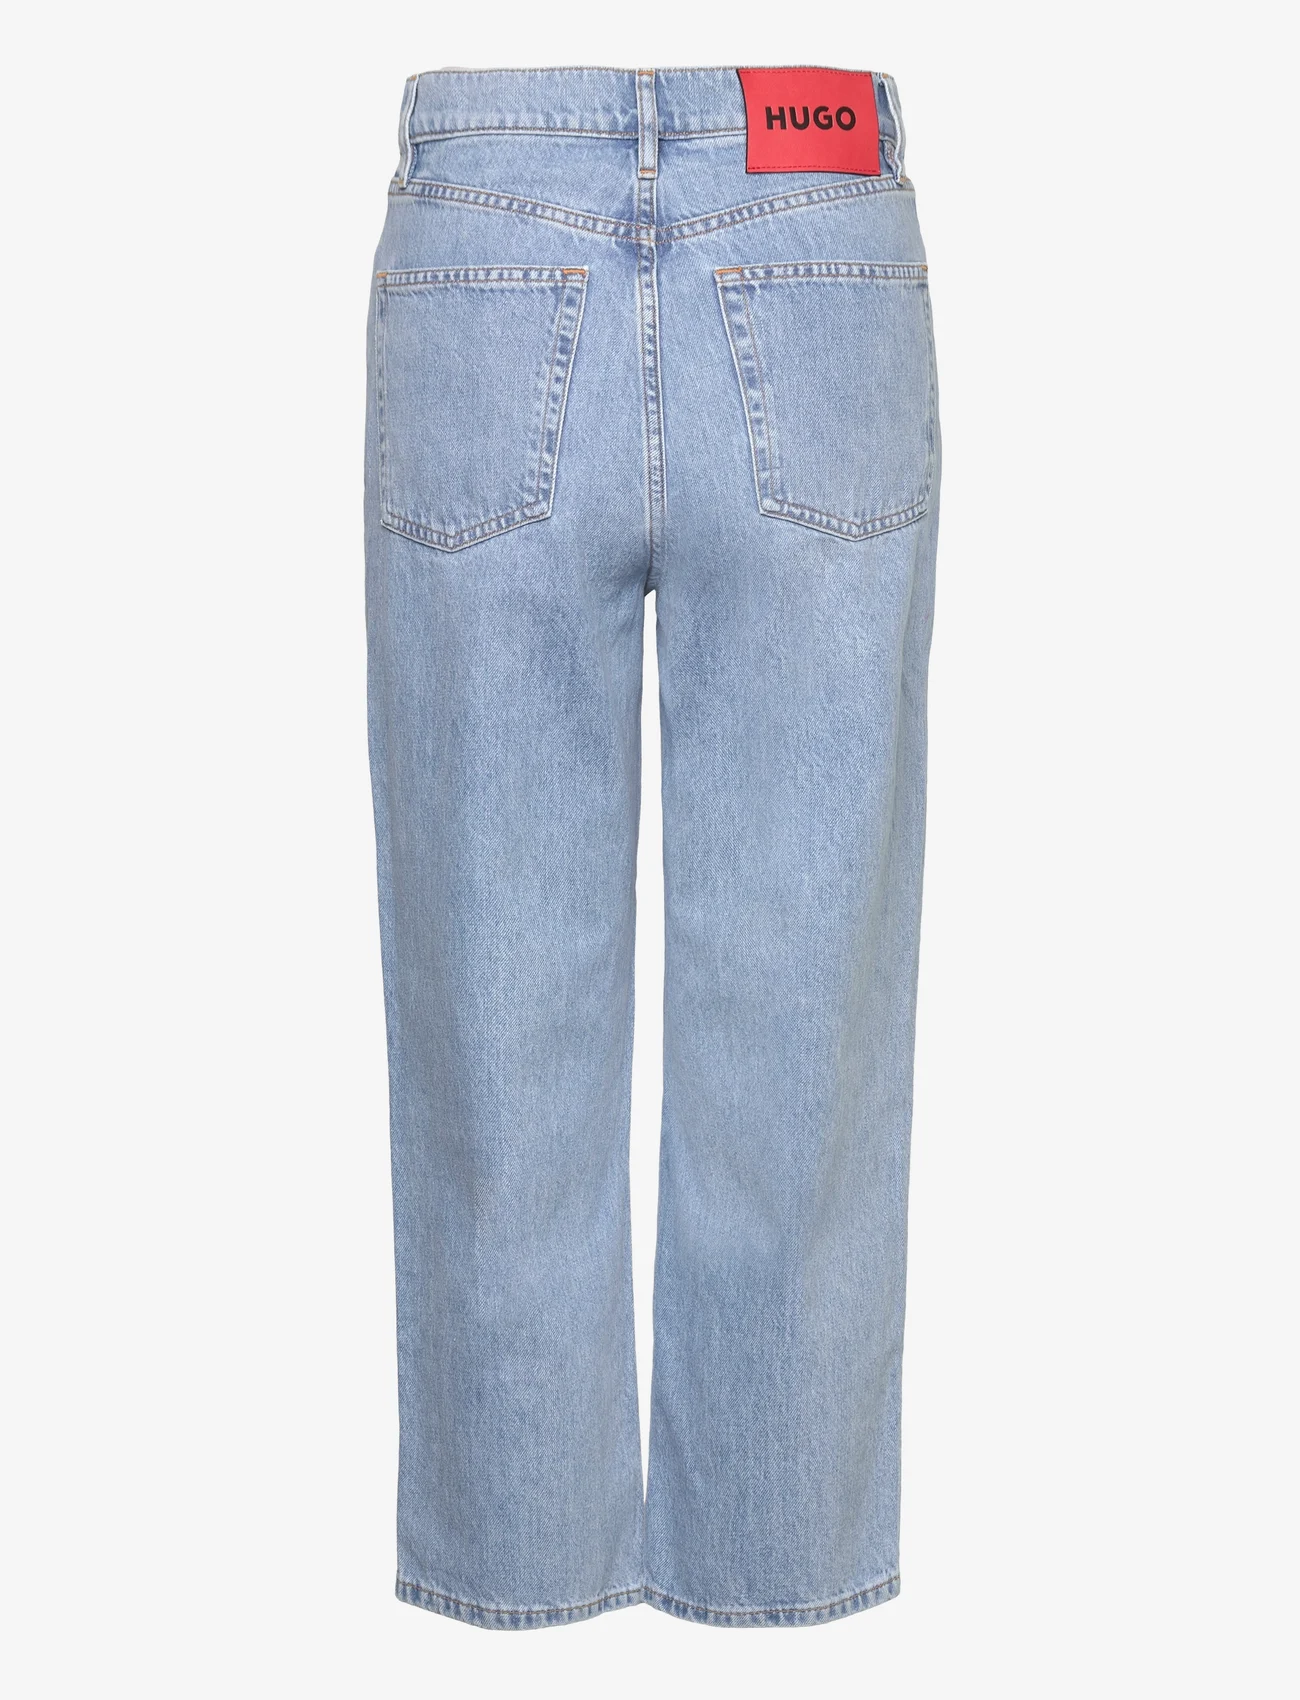 HUGO - 933 - straight jeans - turquoise/aqua - 1